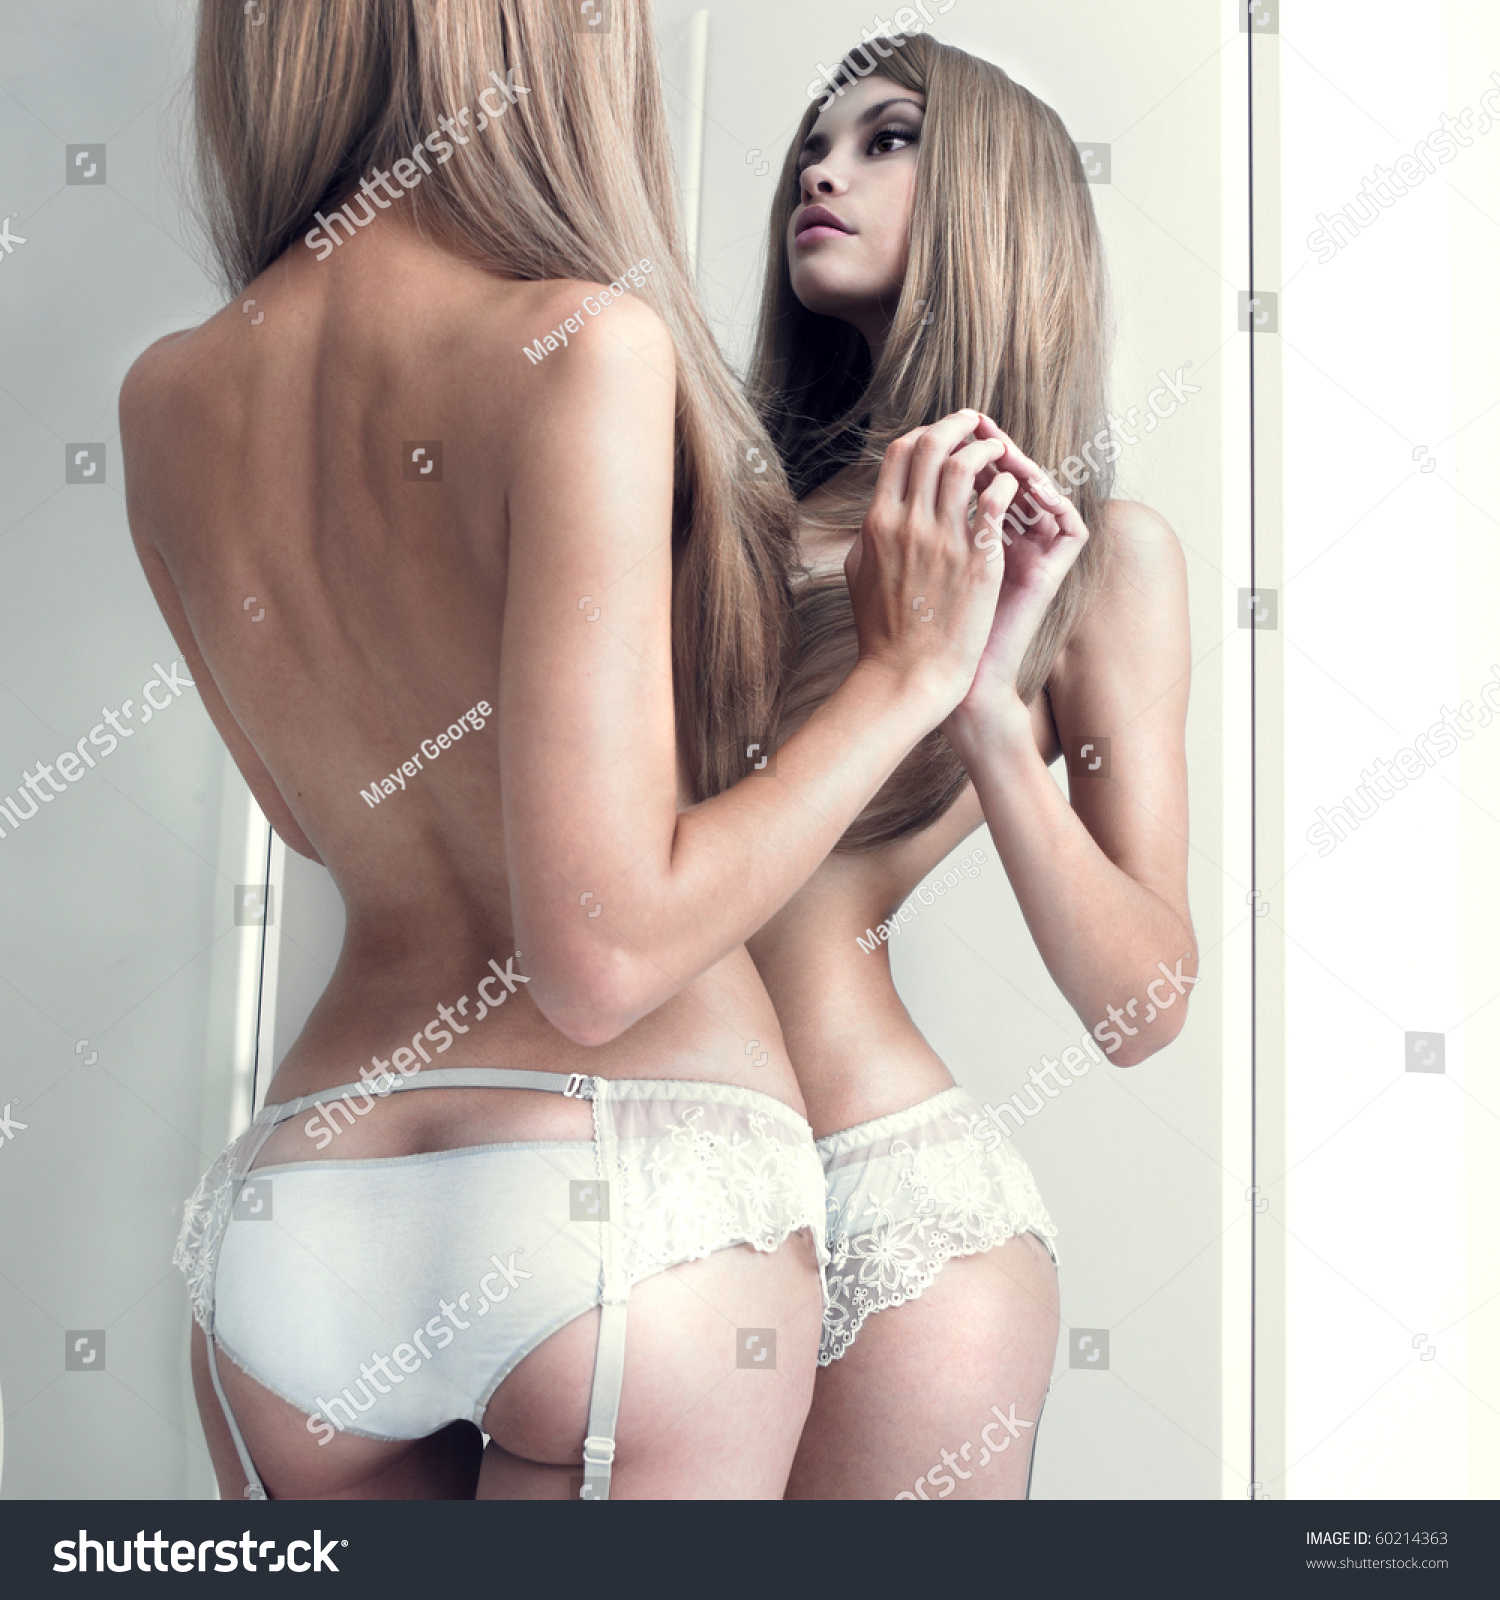 Nude Teen In The Mirror 83